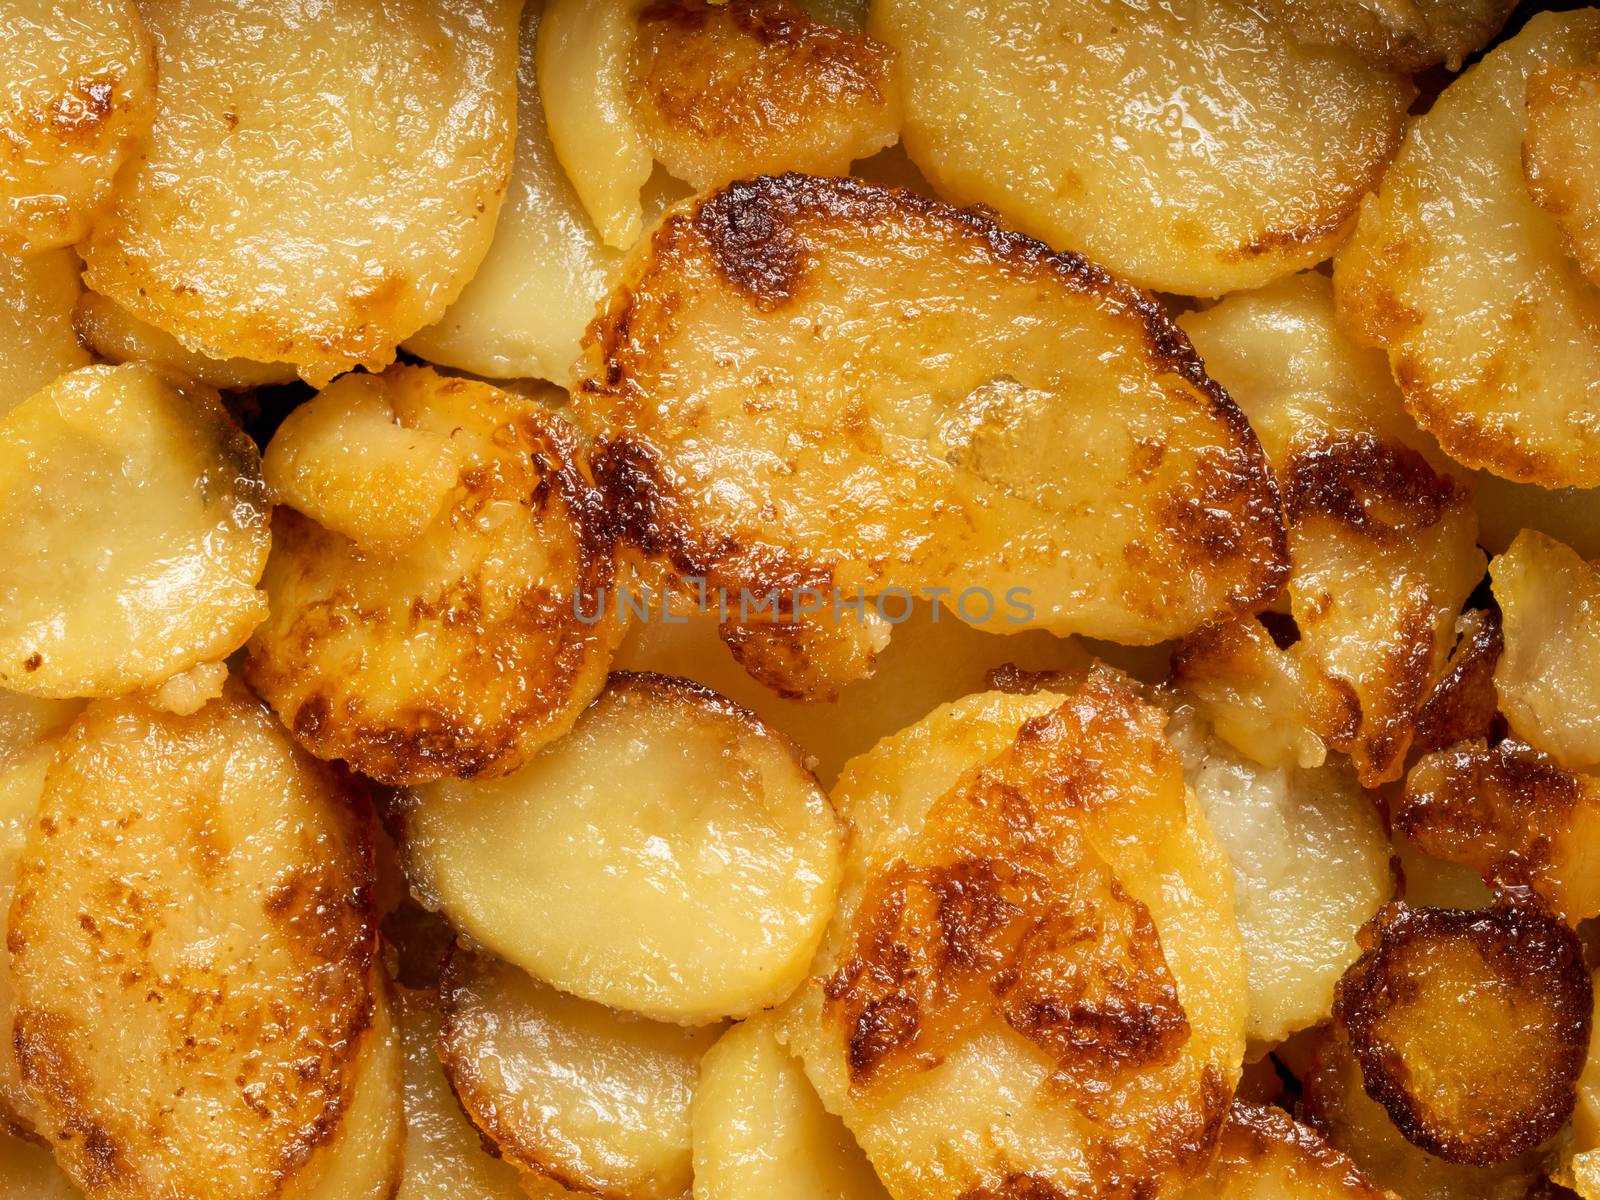 rustic golden german pan fried potato bratkartofflen food backgr by zkruger